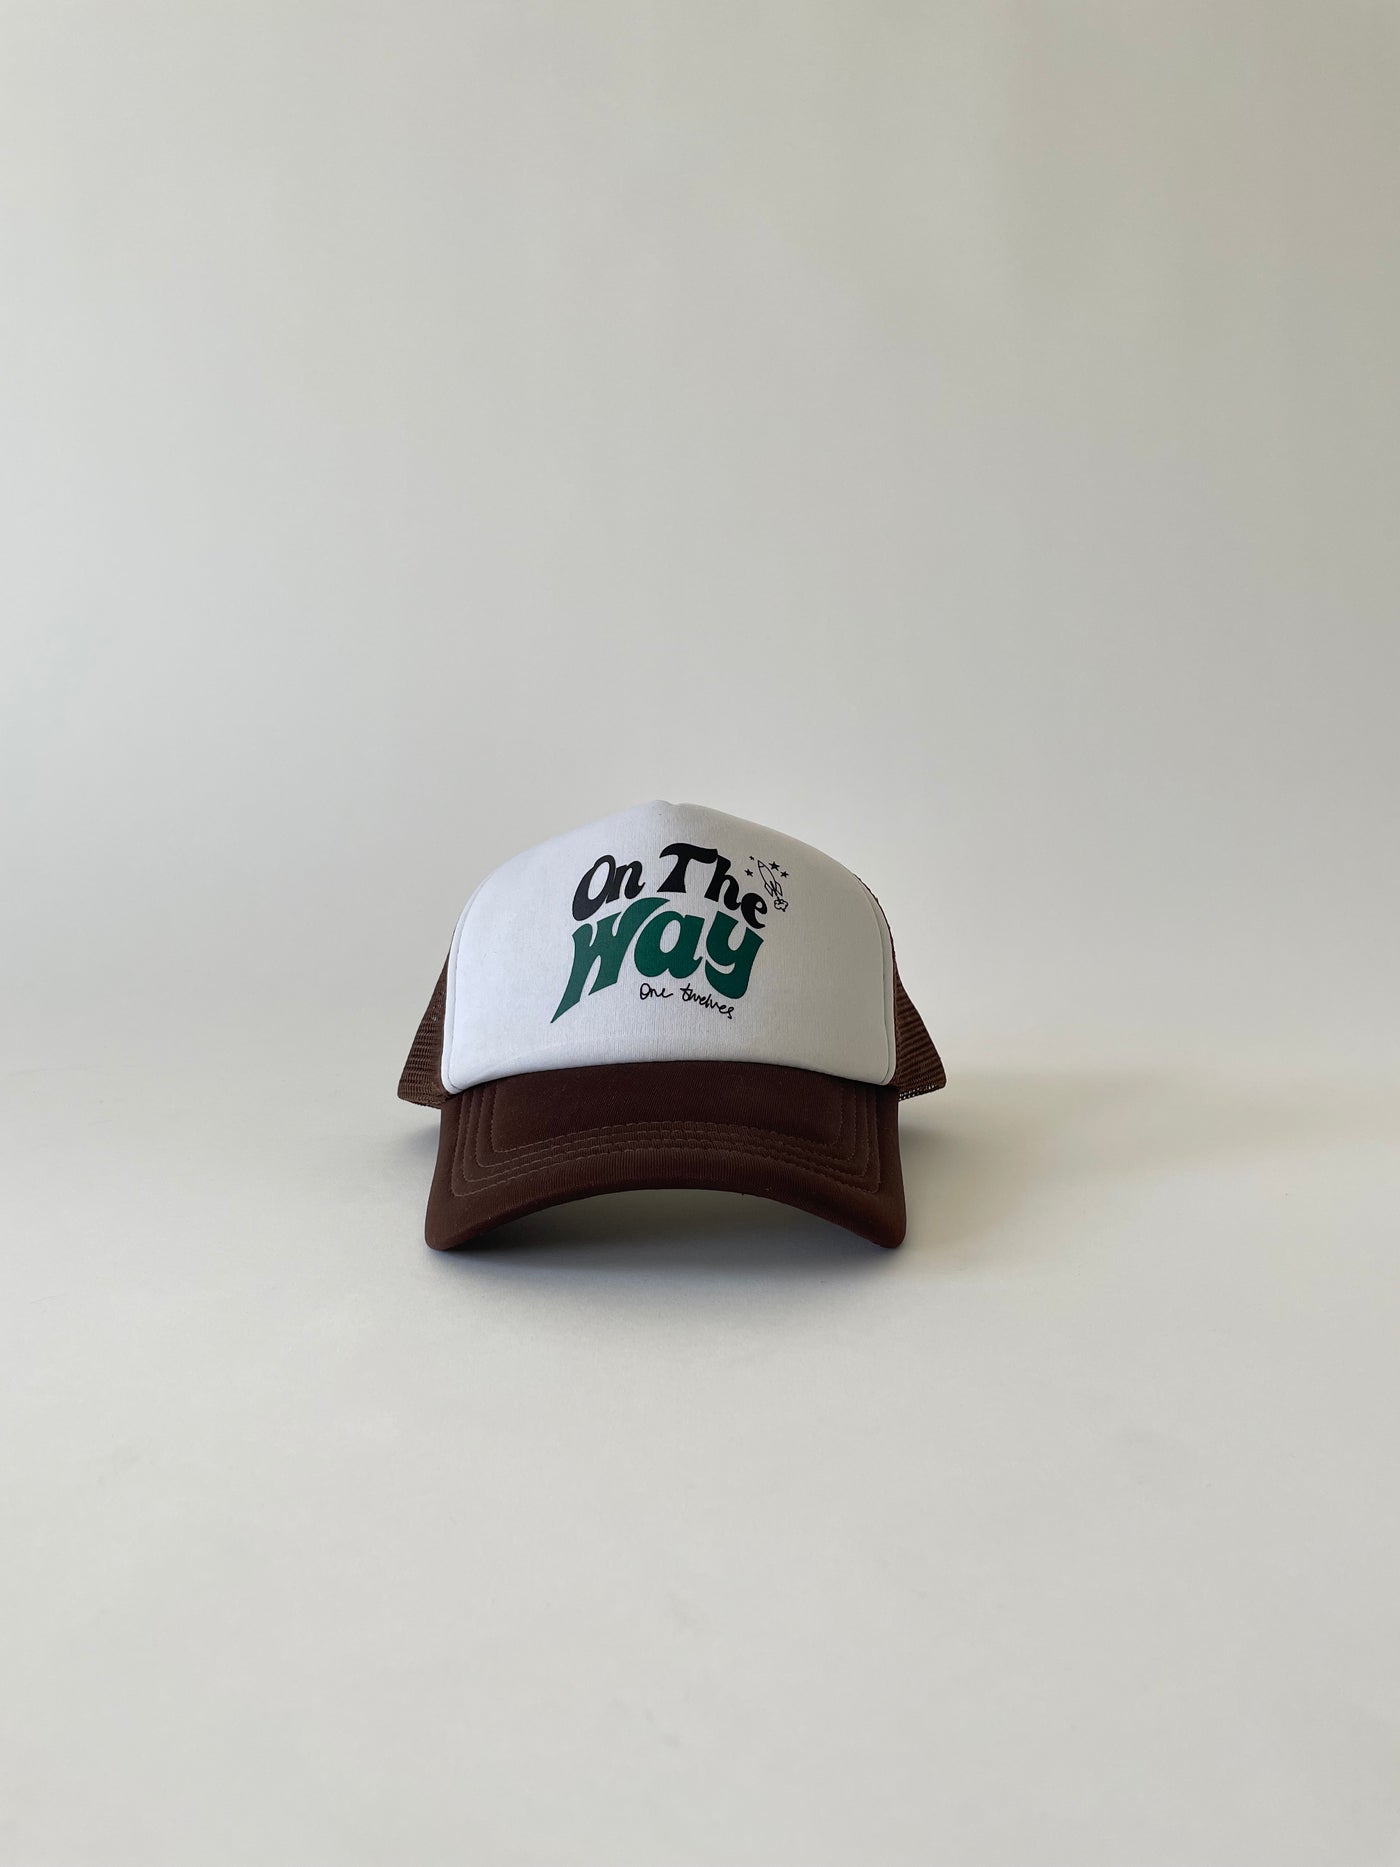 “On The Way” Trucker Hat